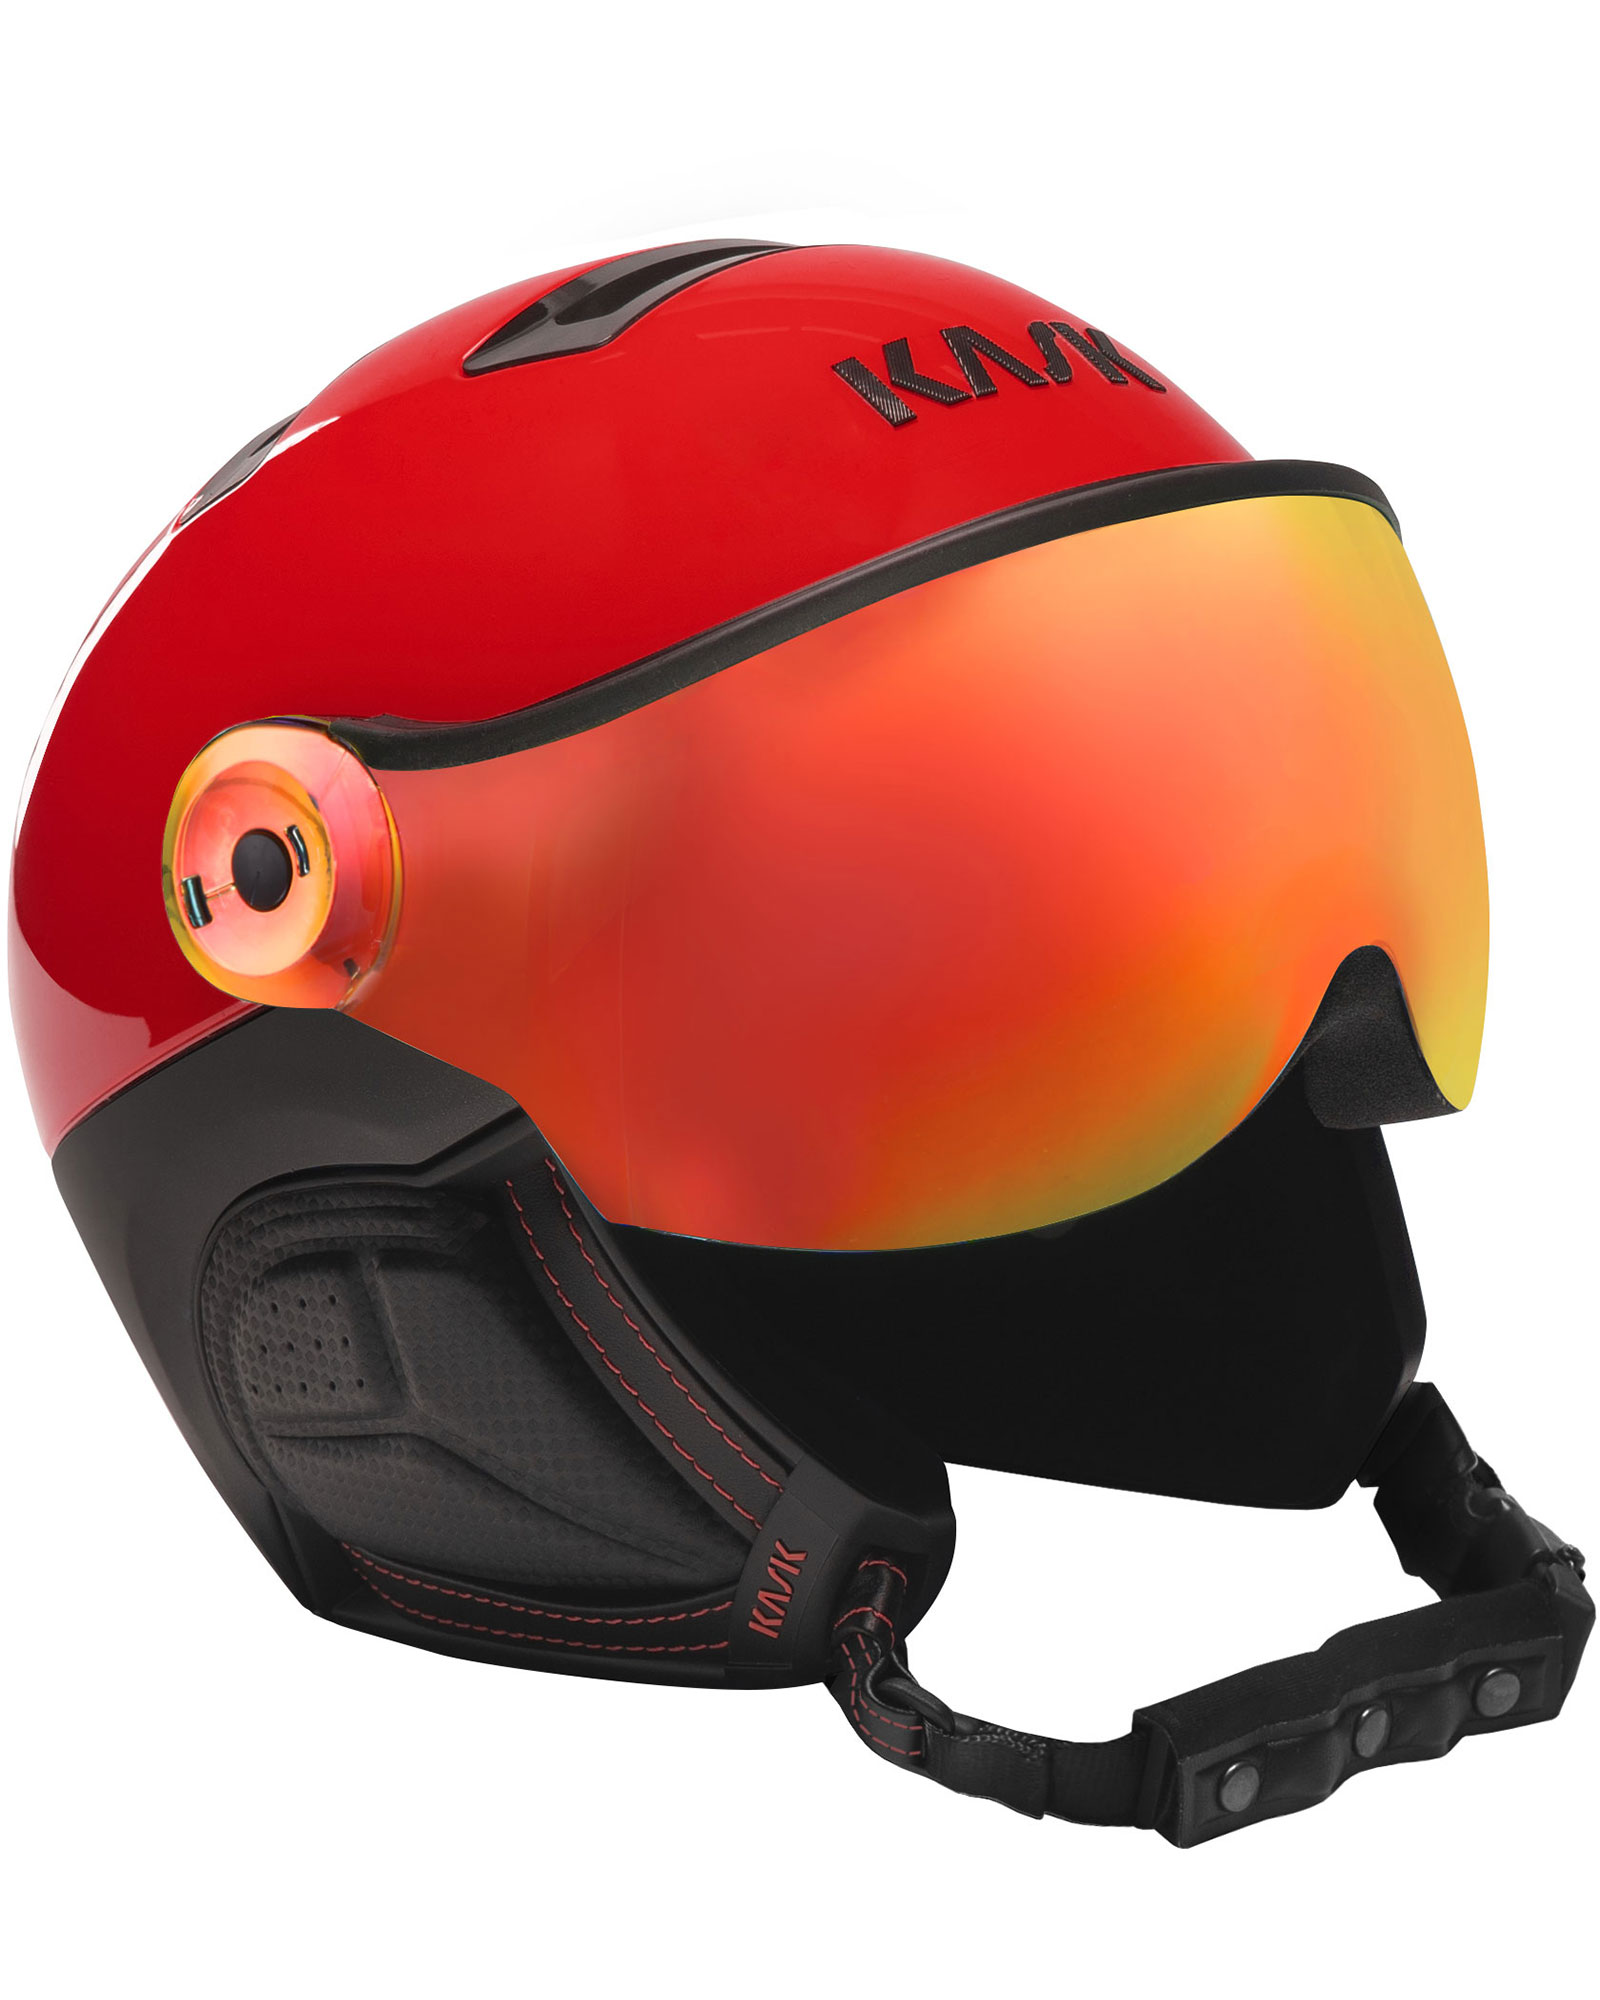 KASK Montecarlo Visor Helmet - Red - Red Mirror Visor M